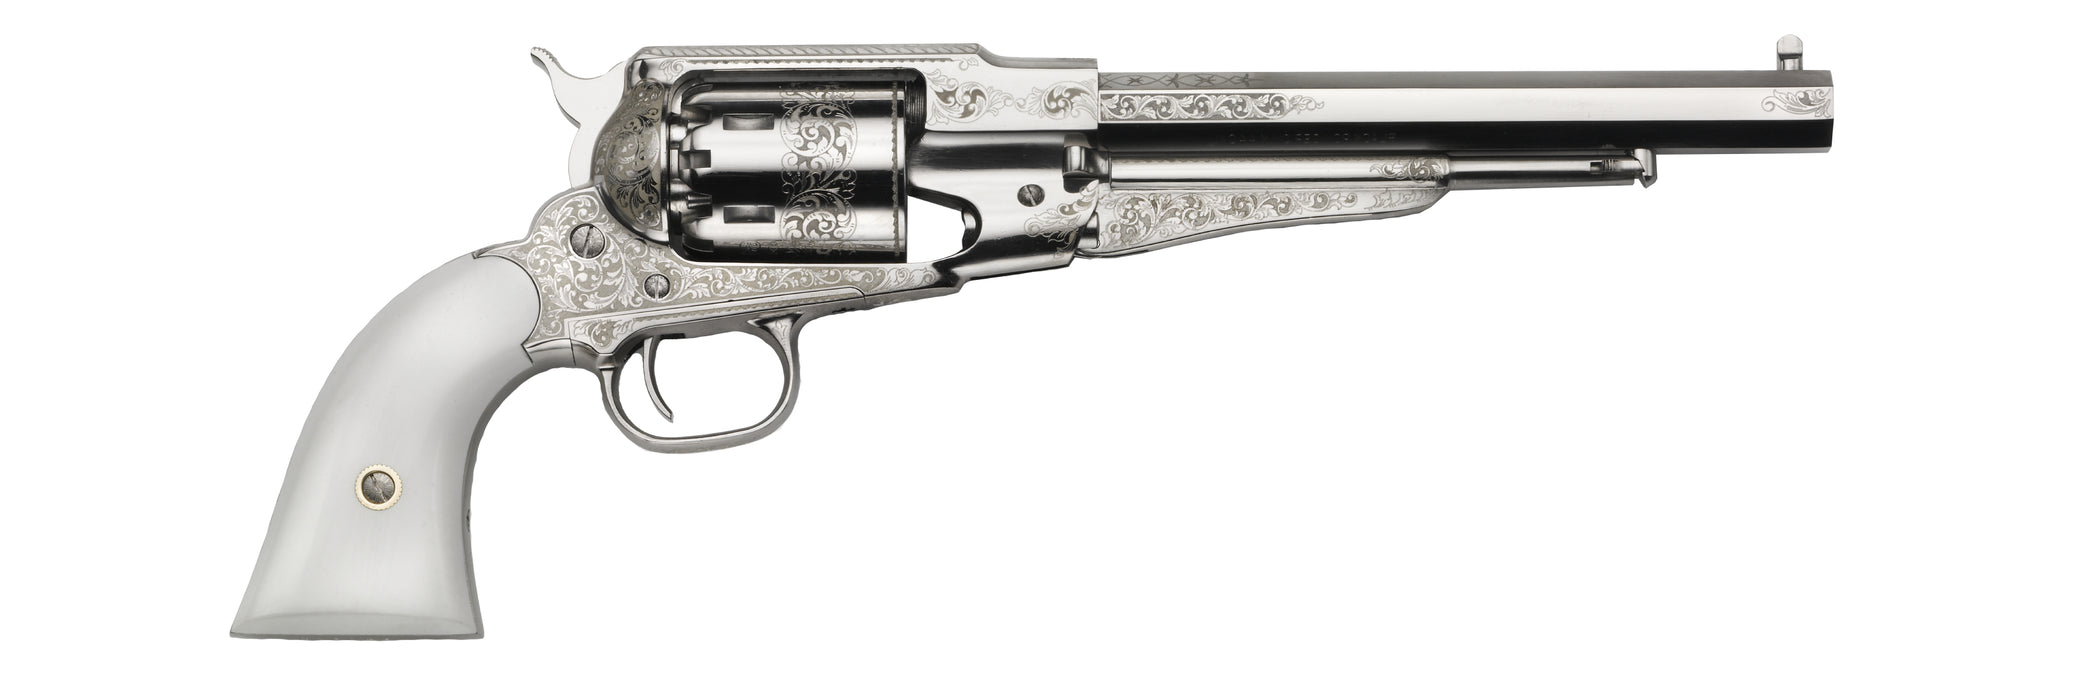 Pietta 1858 Remington Texas Nickel General Custer Model - White Polymer Grip - Black Powder Revolver - .44 Caliber - Nickeled Frame & Barrel - RBN44/CS/IG